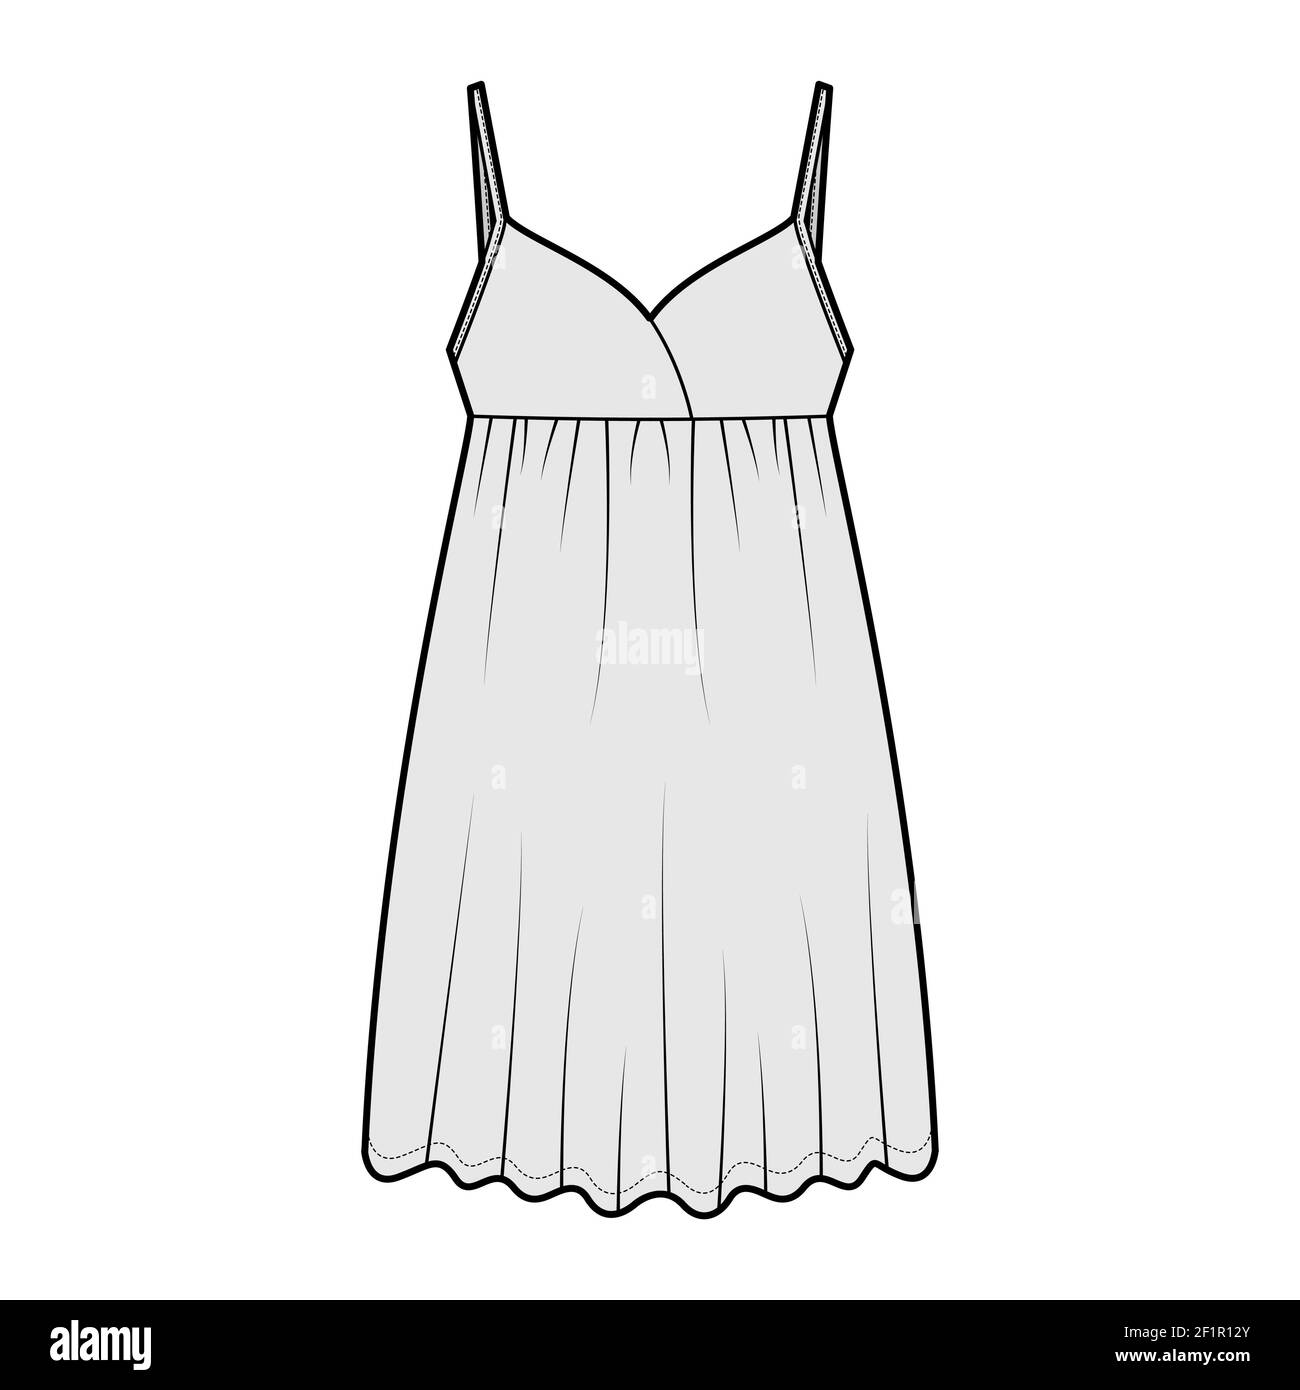 https://c8.alamy.com/comp/2F1R12Y/babydoll-dress-sleepwear-pajama-technical-fashion-illustration-with-mini-length-oversized-adjustable-shoulder-straps-trapeze-silhouette-flat-front-grey-color-style-women-men-unisex-cad-mockup-2F1R12Y.jpg